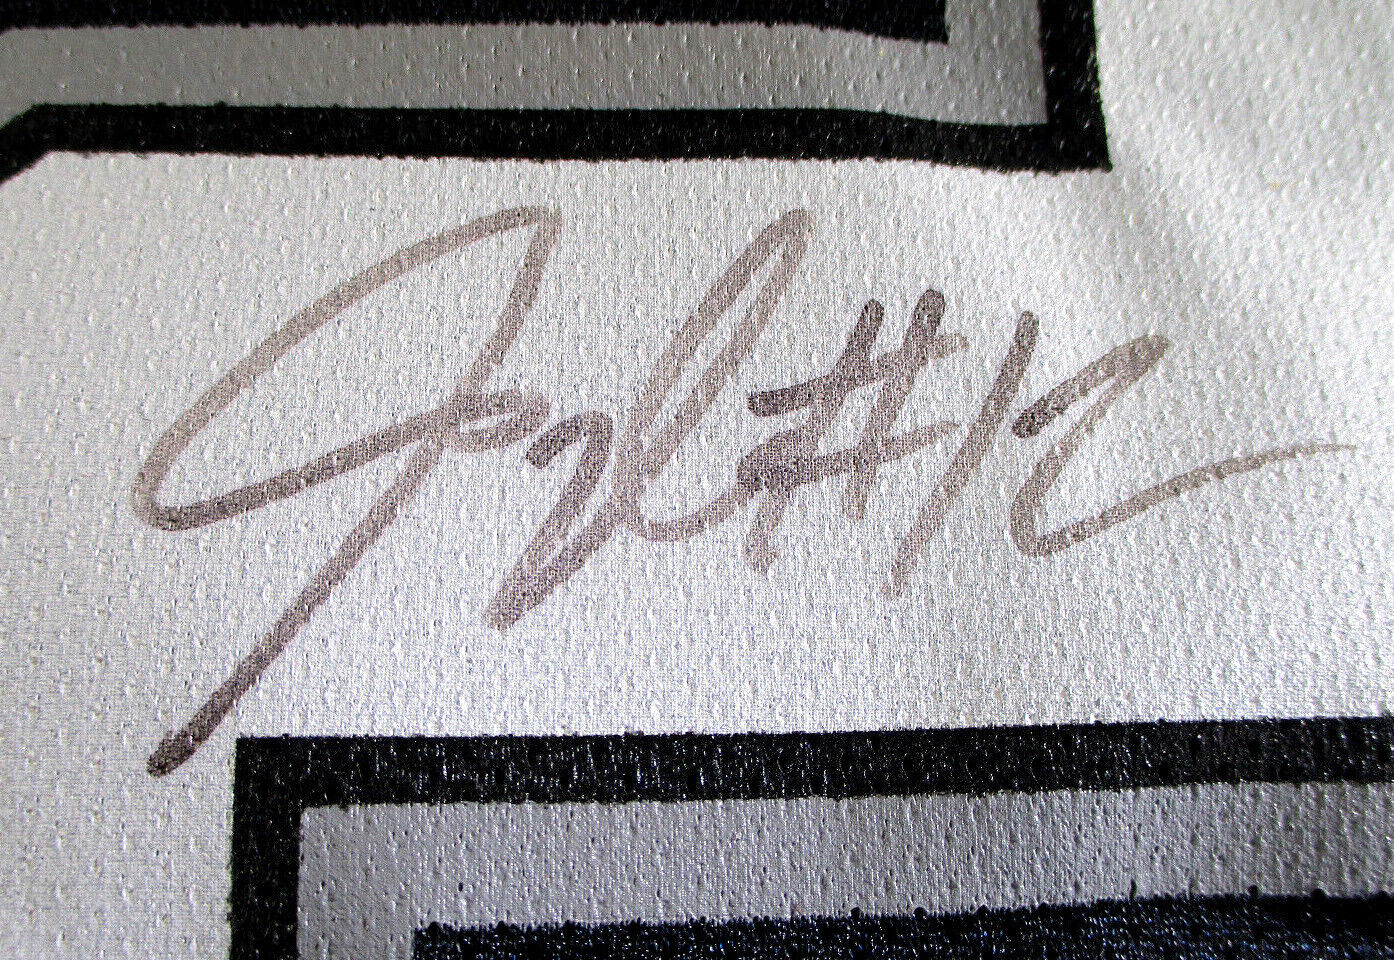 Lamarcus Aldridge / Autographed San Antonio Spurs Black Pro Style Jersey / C.O.A